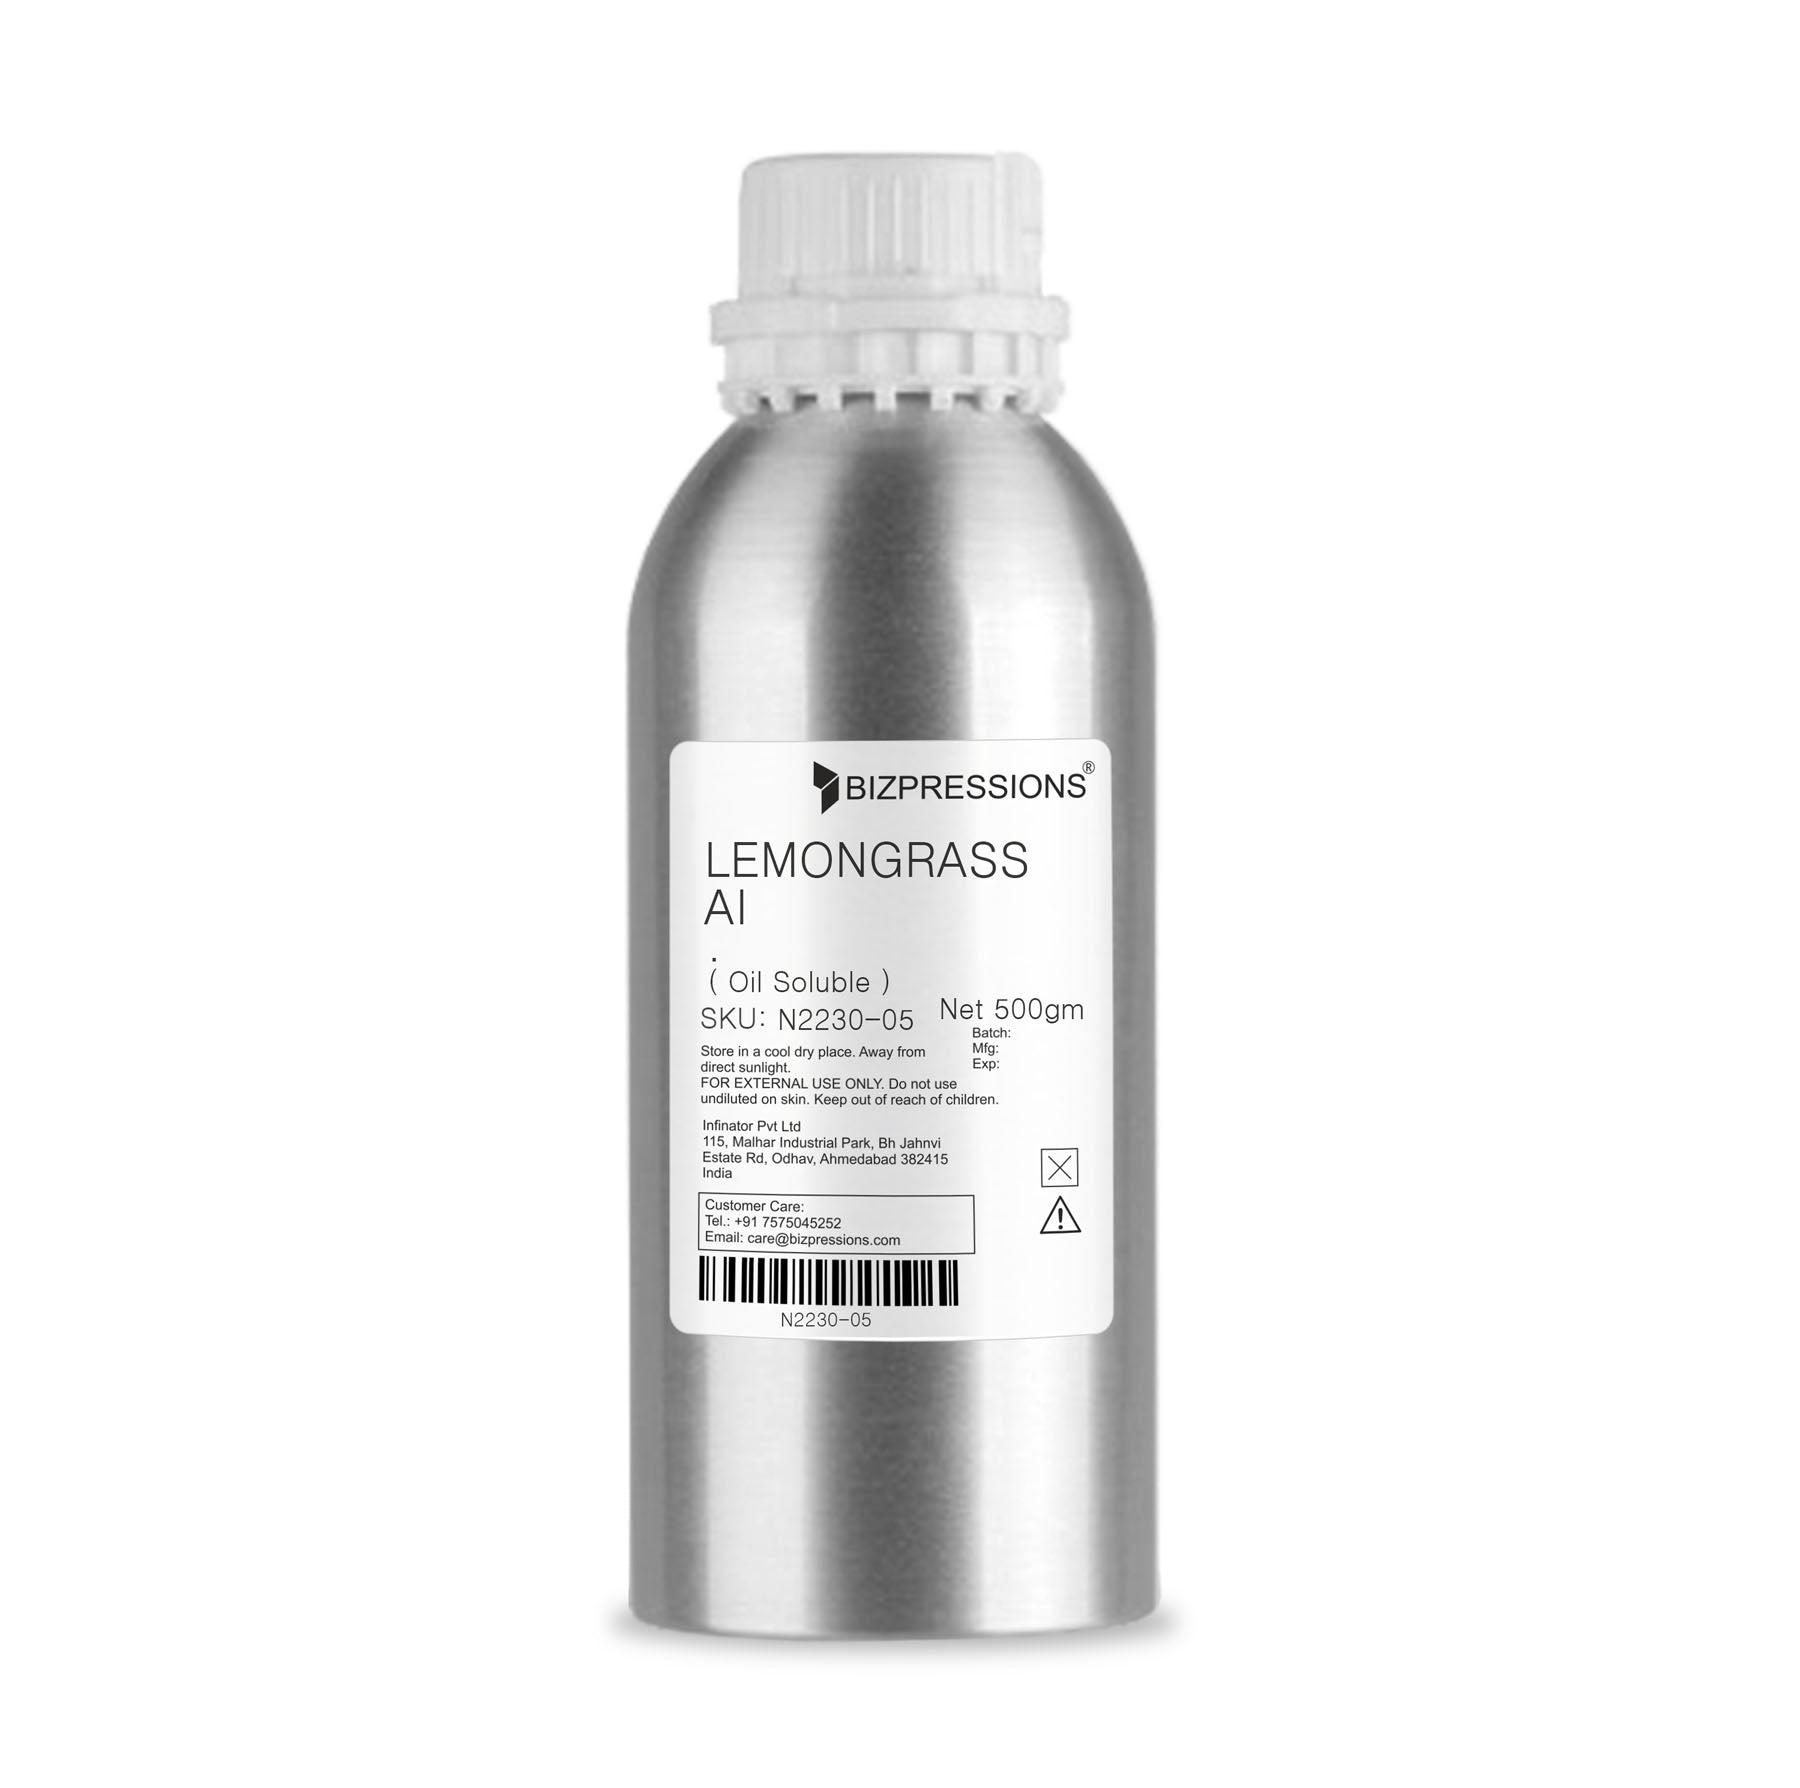 LEMONGRASS AI - Fragrance ( Oil Soluble ) - 500 gm